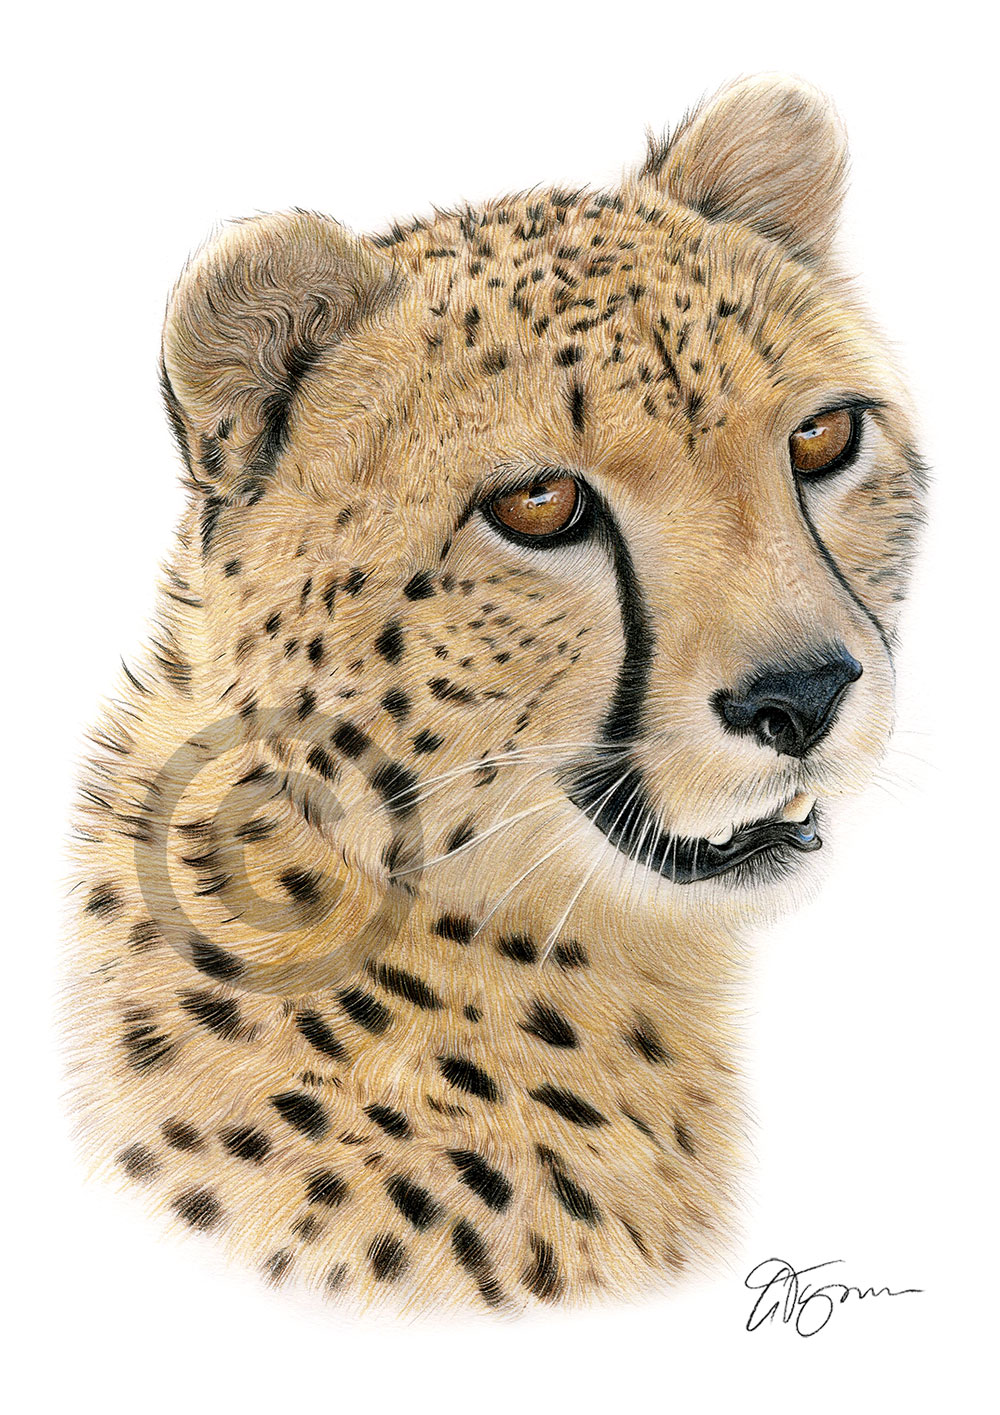 Colour pencil drawing of an African cheetah by artist Gary Tymon